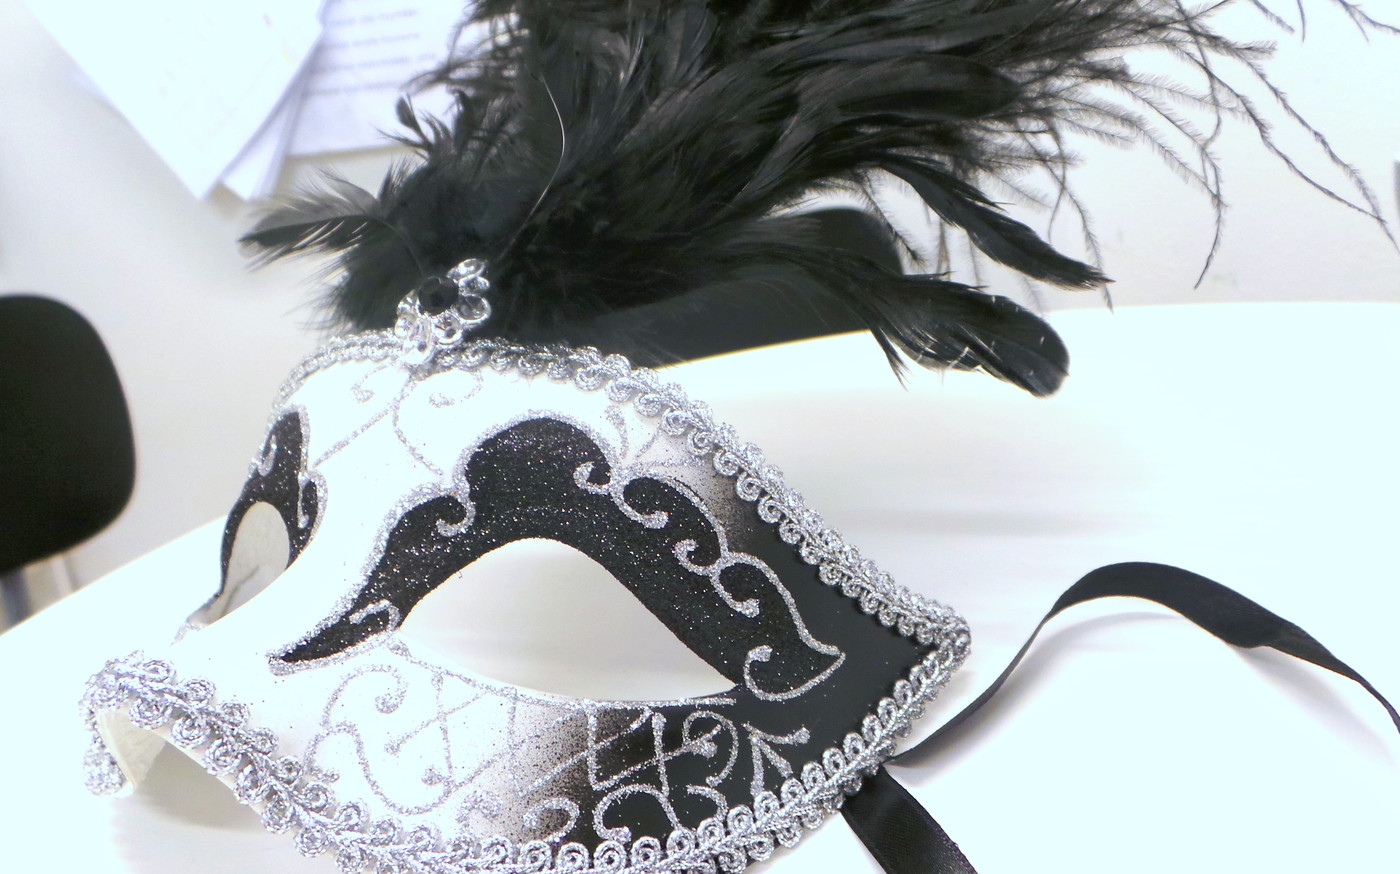 Dress code: Black & White + Mask is a mandatory